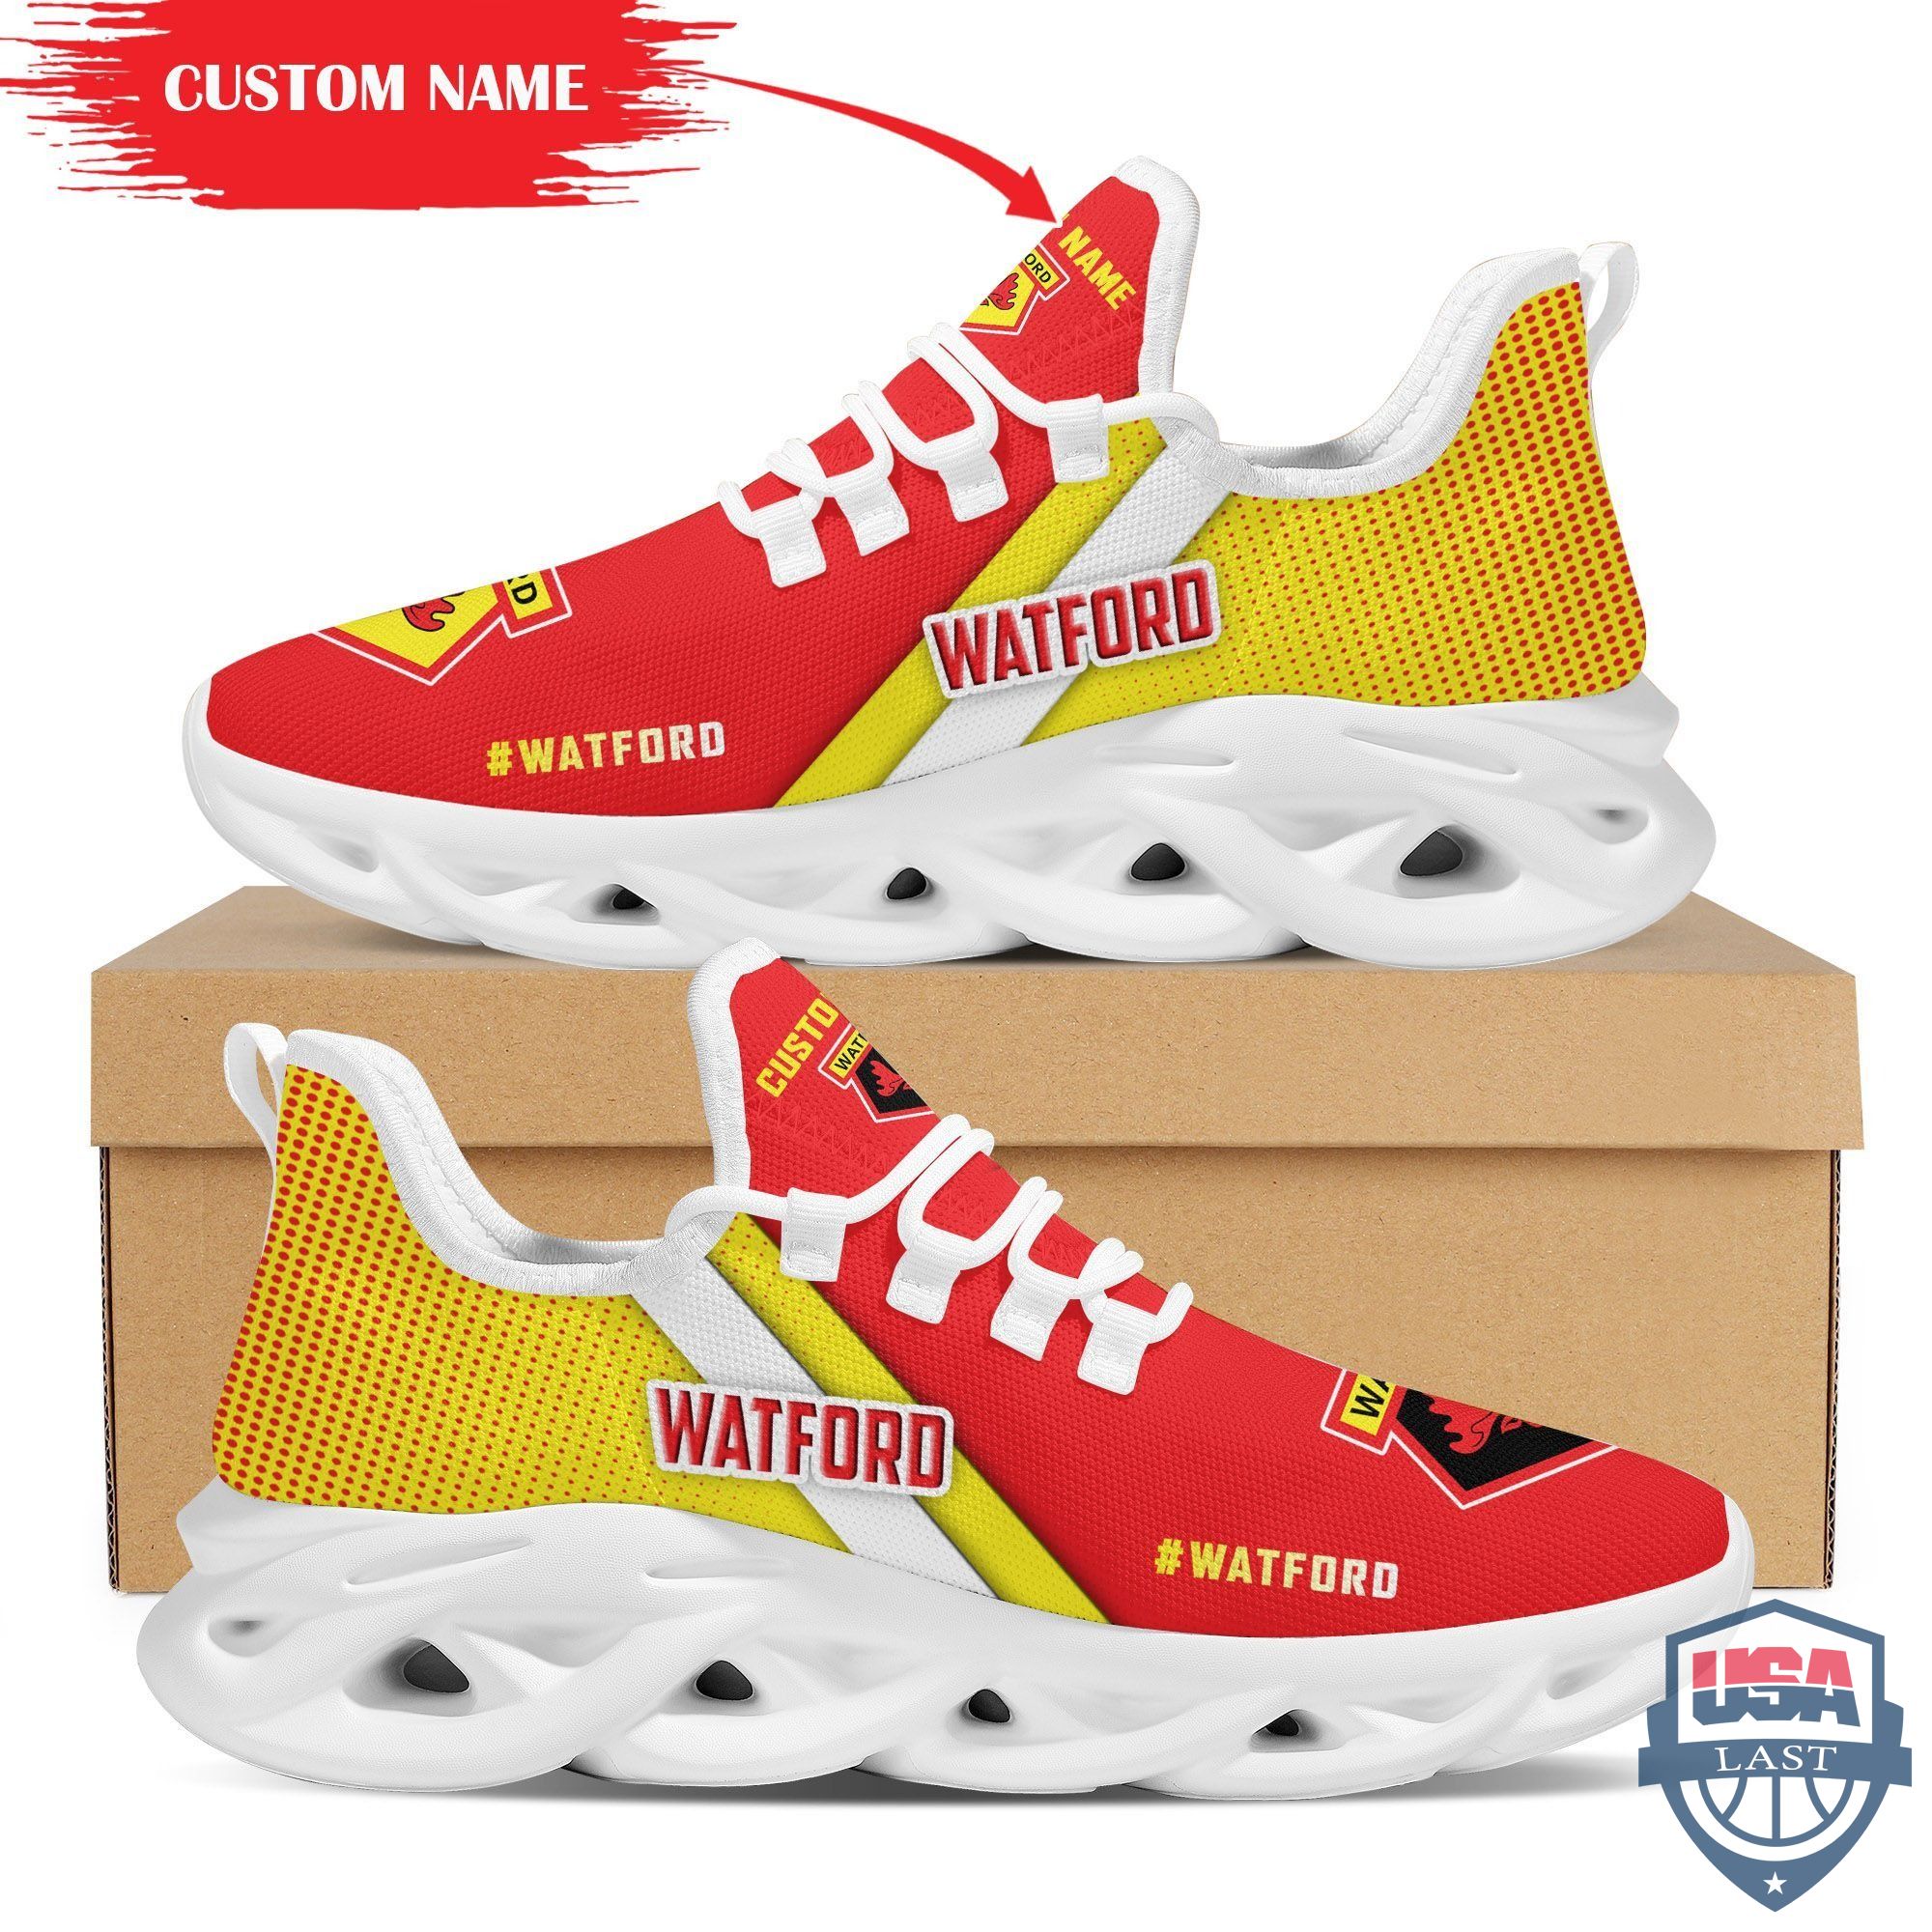 Watford Custom Name Max Soul Shoes